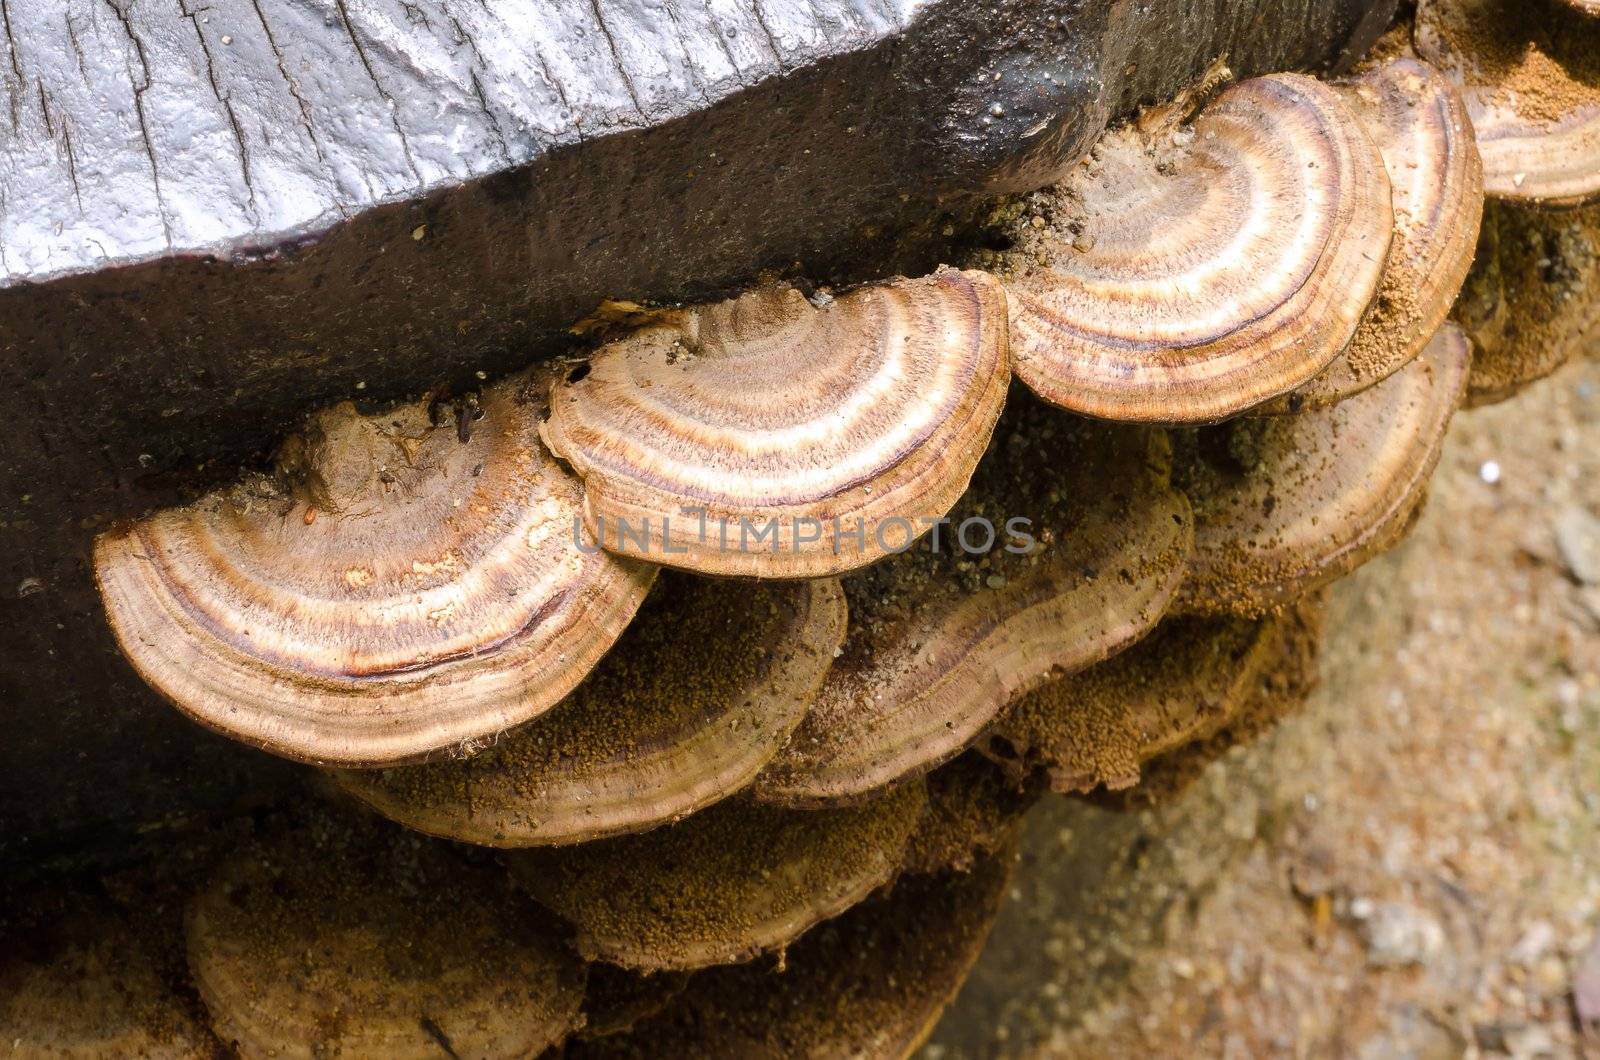 mushroom grow on dead wood by Falara